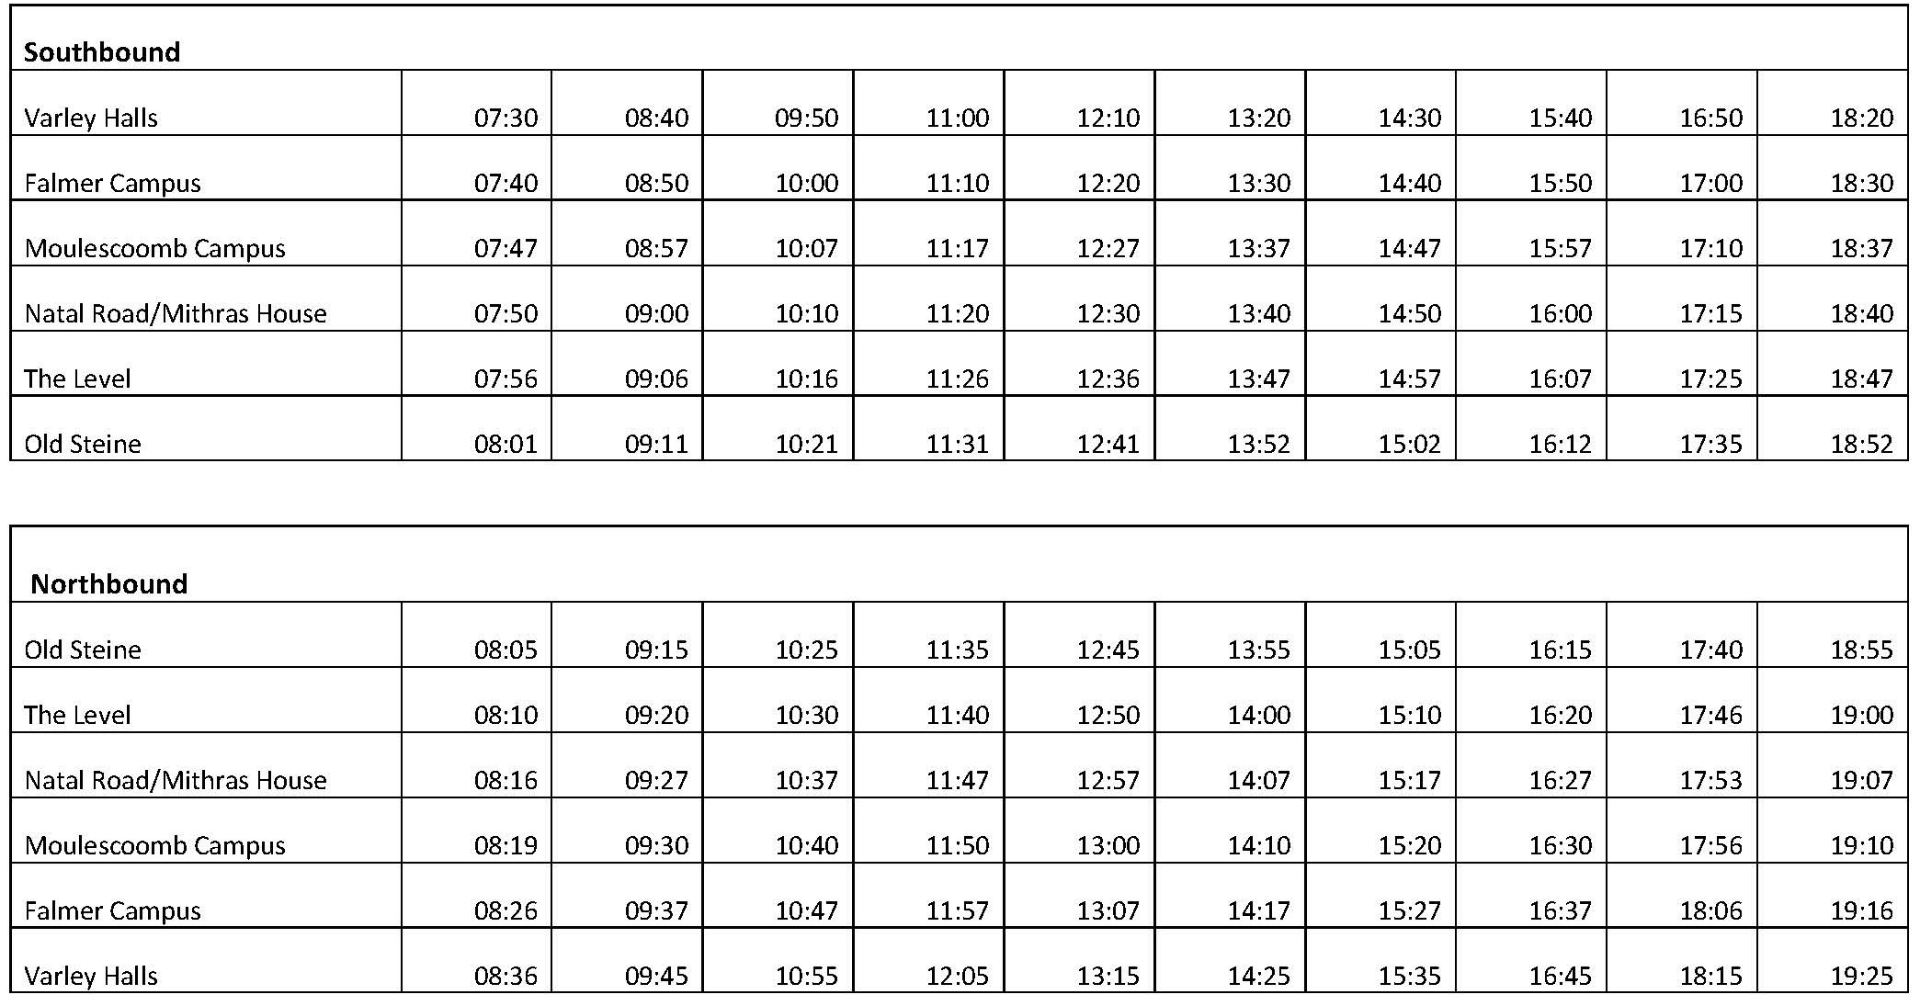 22-23 timetable